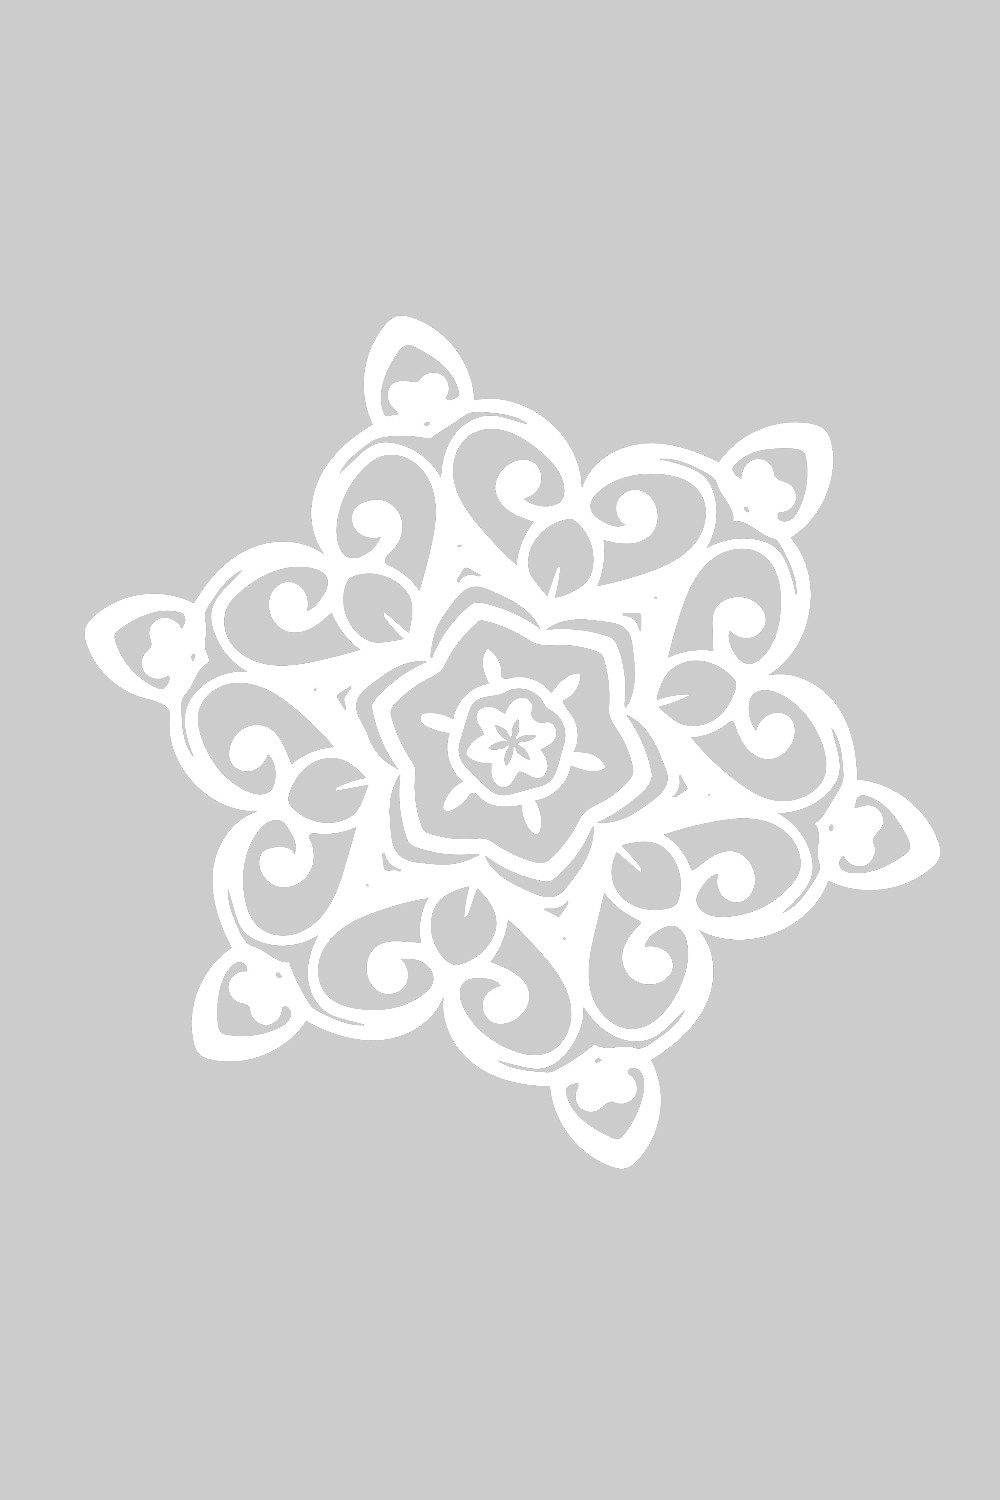 Beautiful Elegant White Snowflake pinterest image.